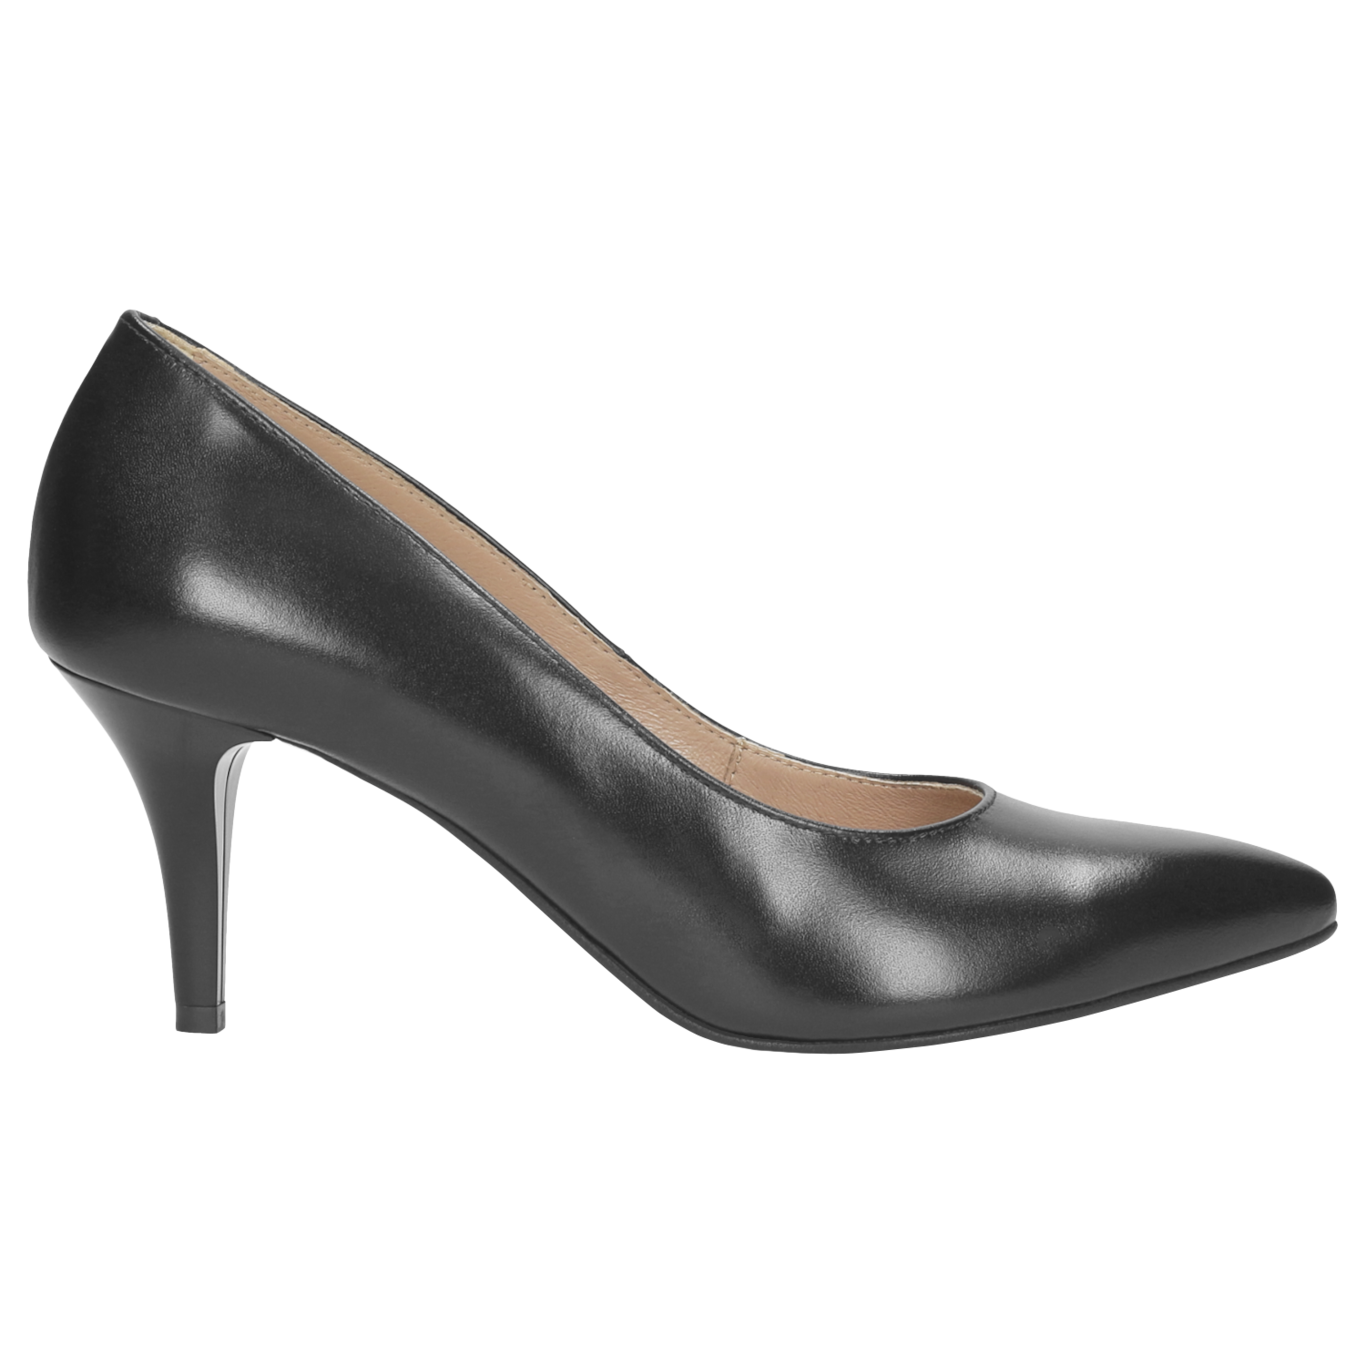 Women's high-heels 8354-51 | Wojas.eu online store